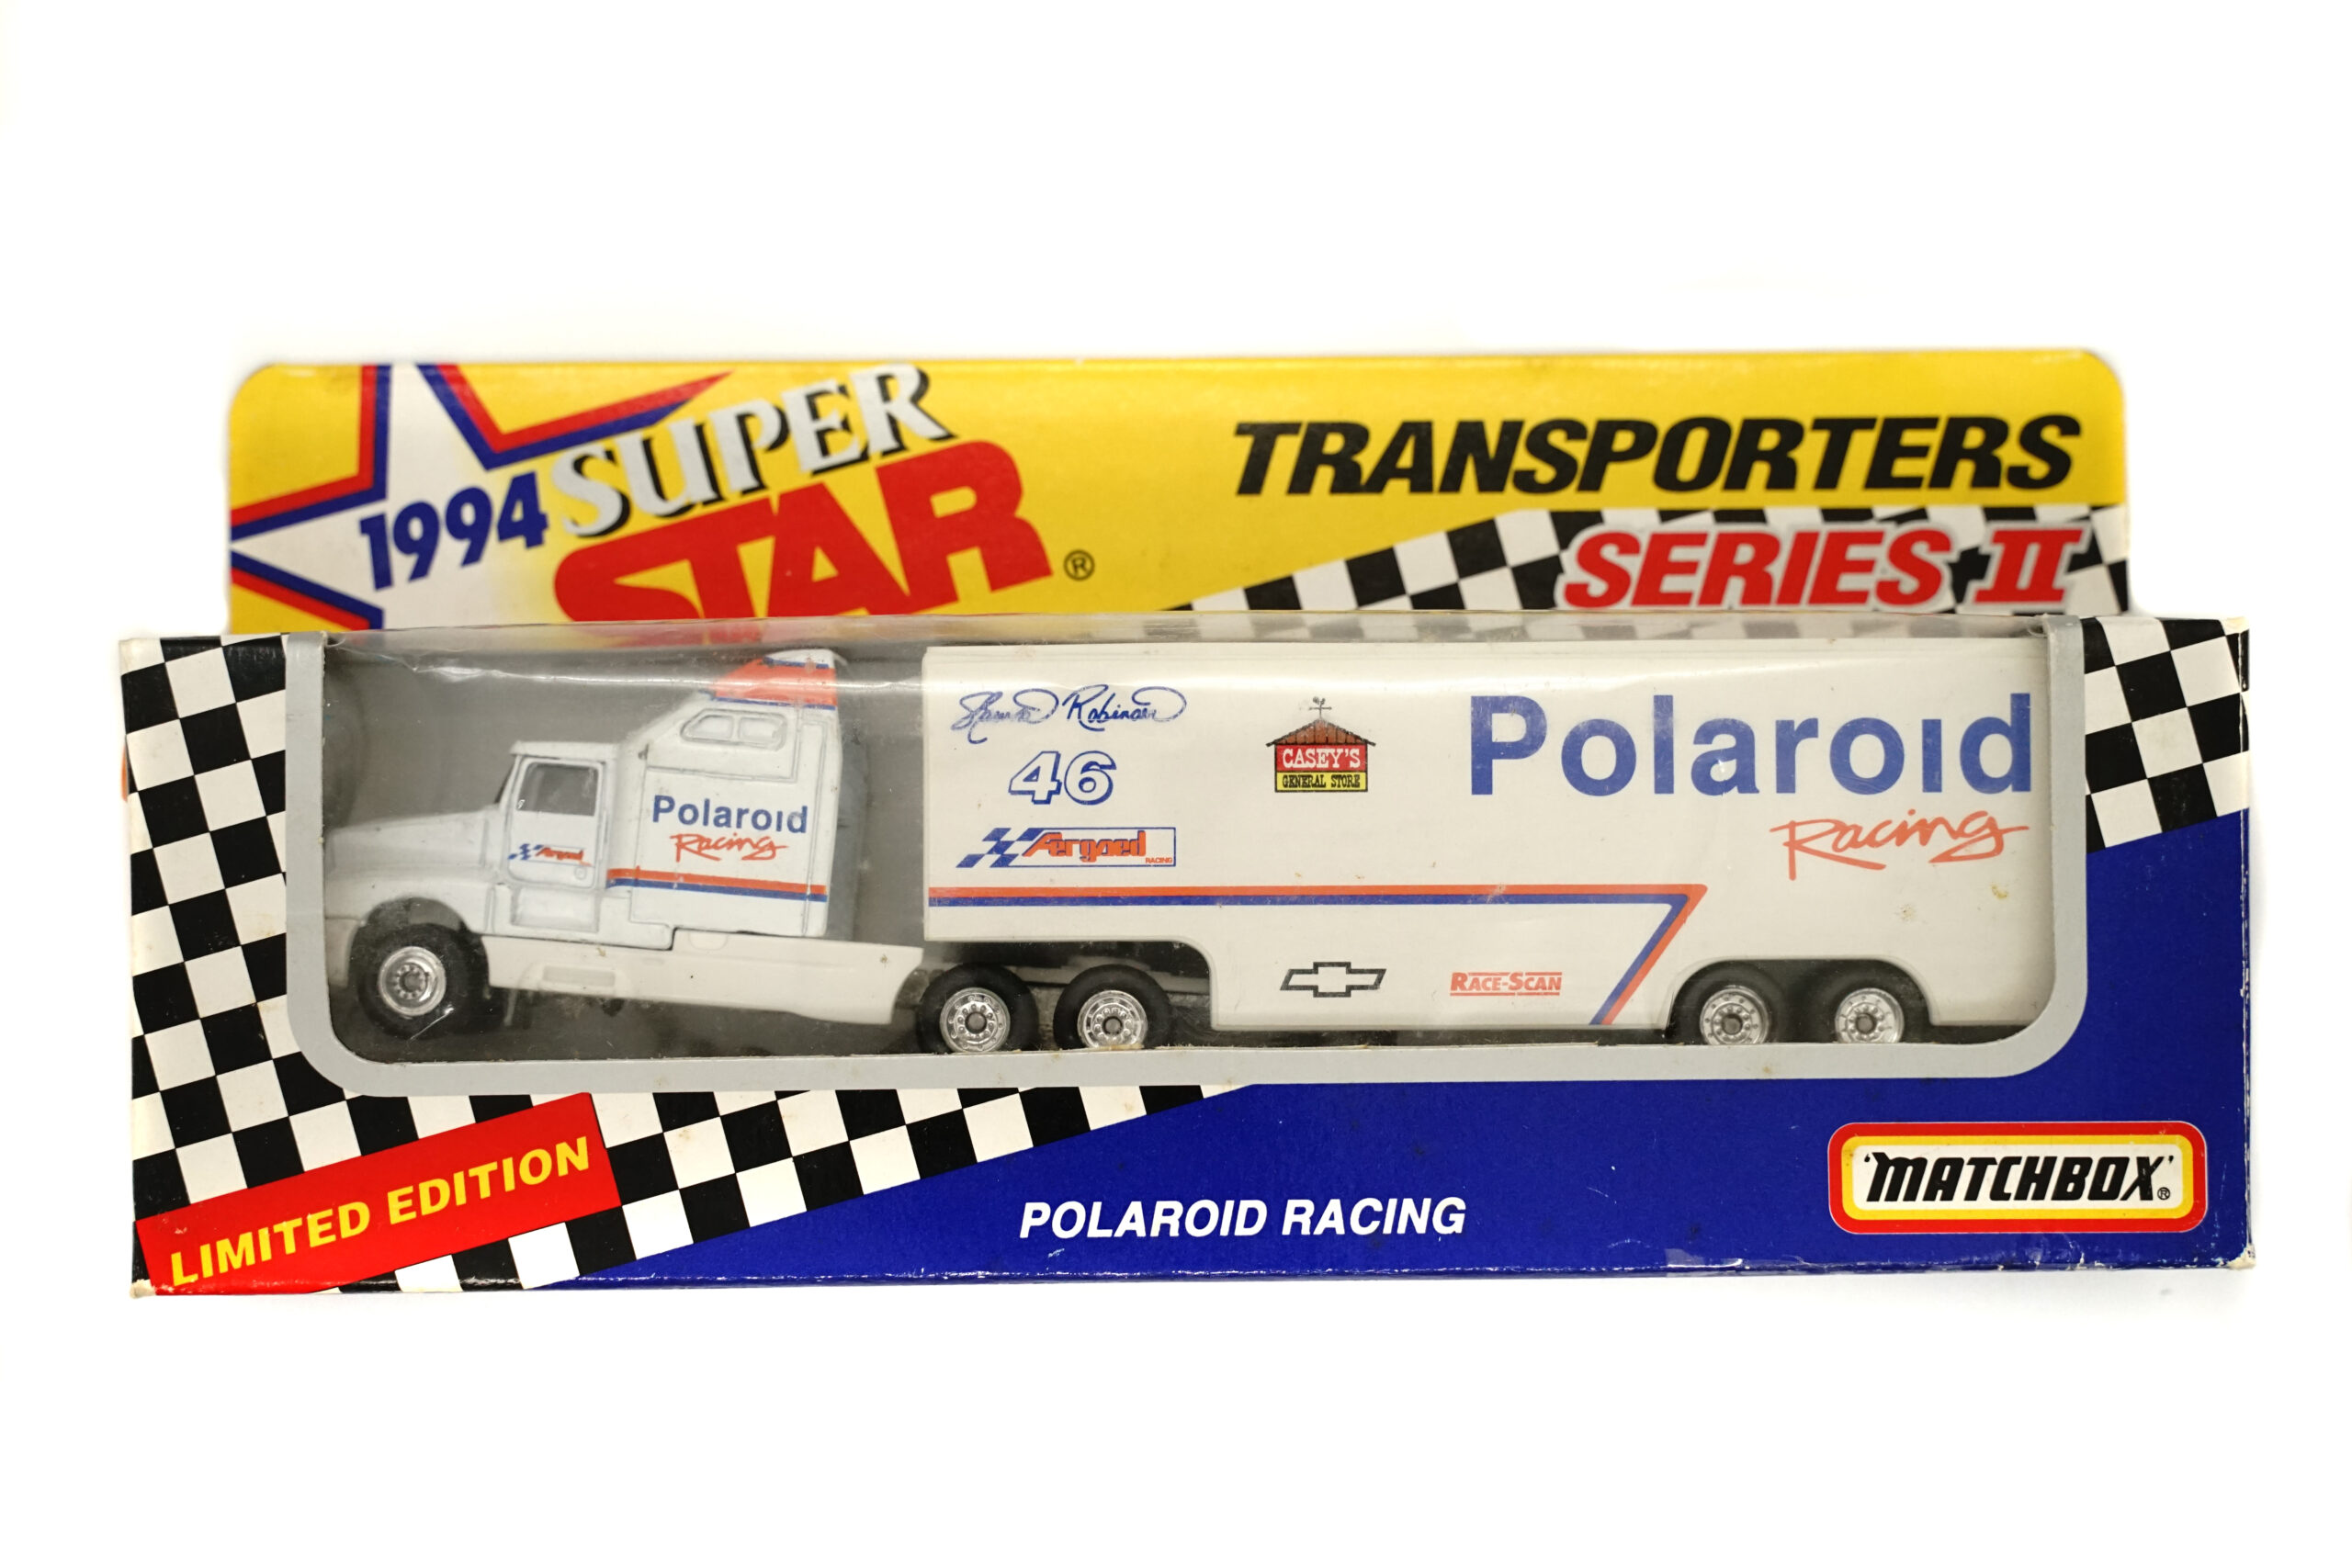 Matchbox SuperStar Polaroid Racing 46 Series II